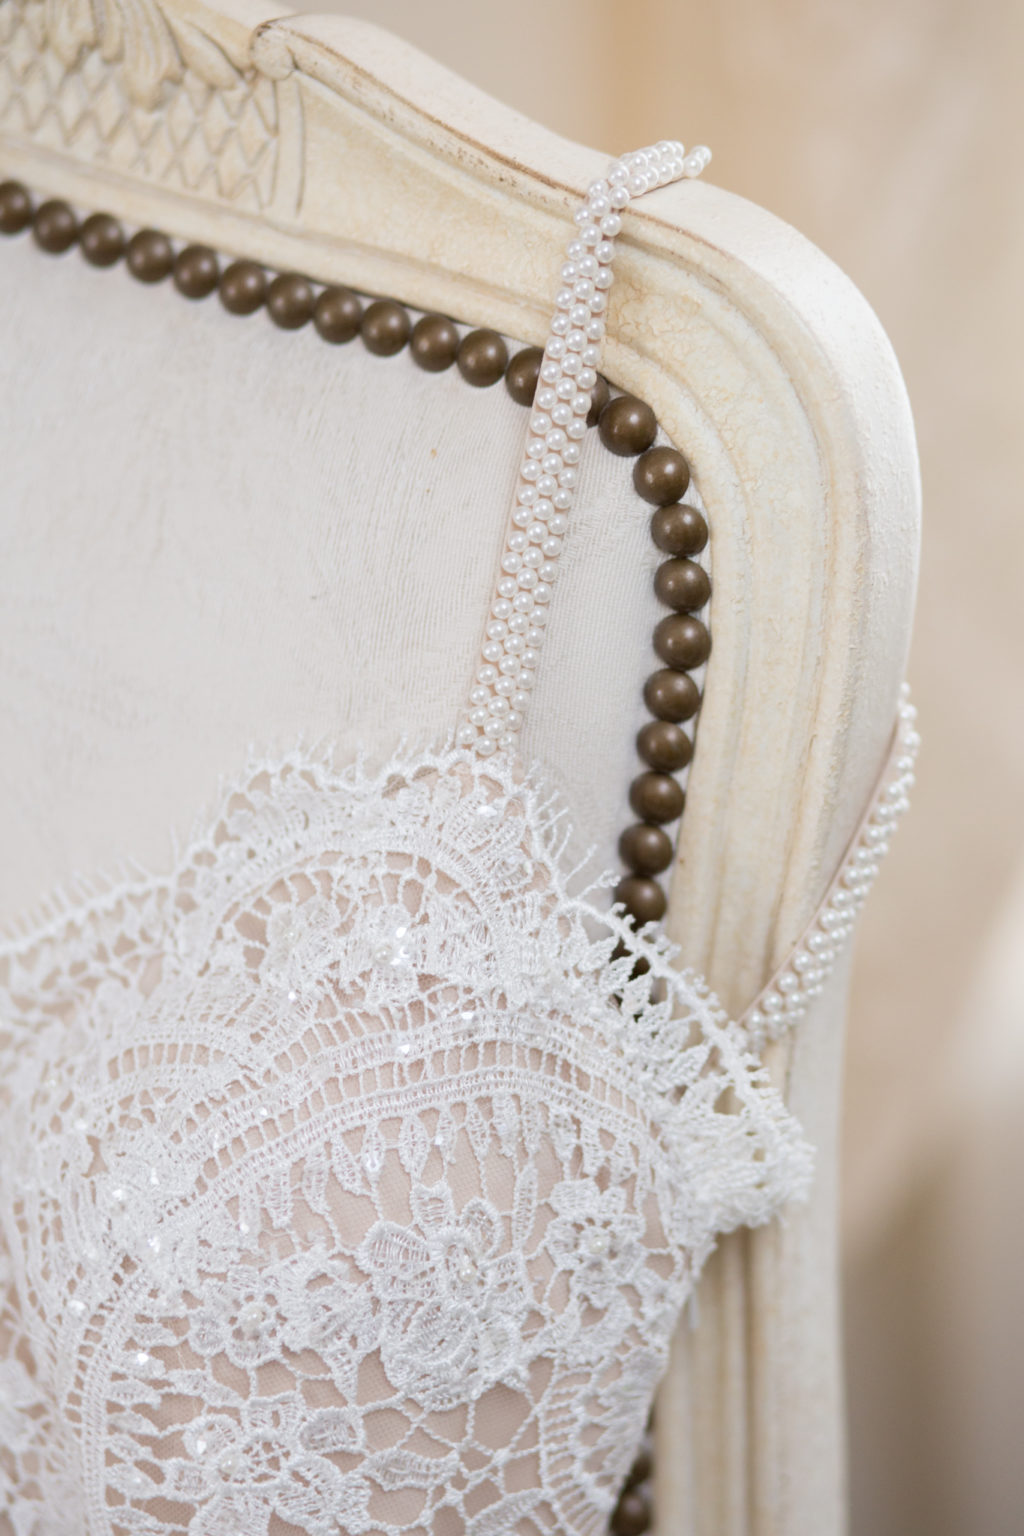 Detail shot of beading on bride